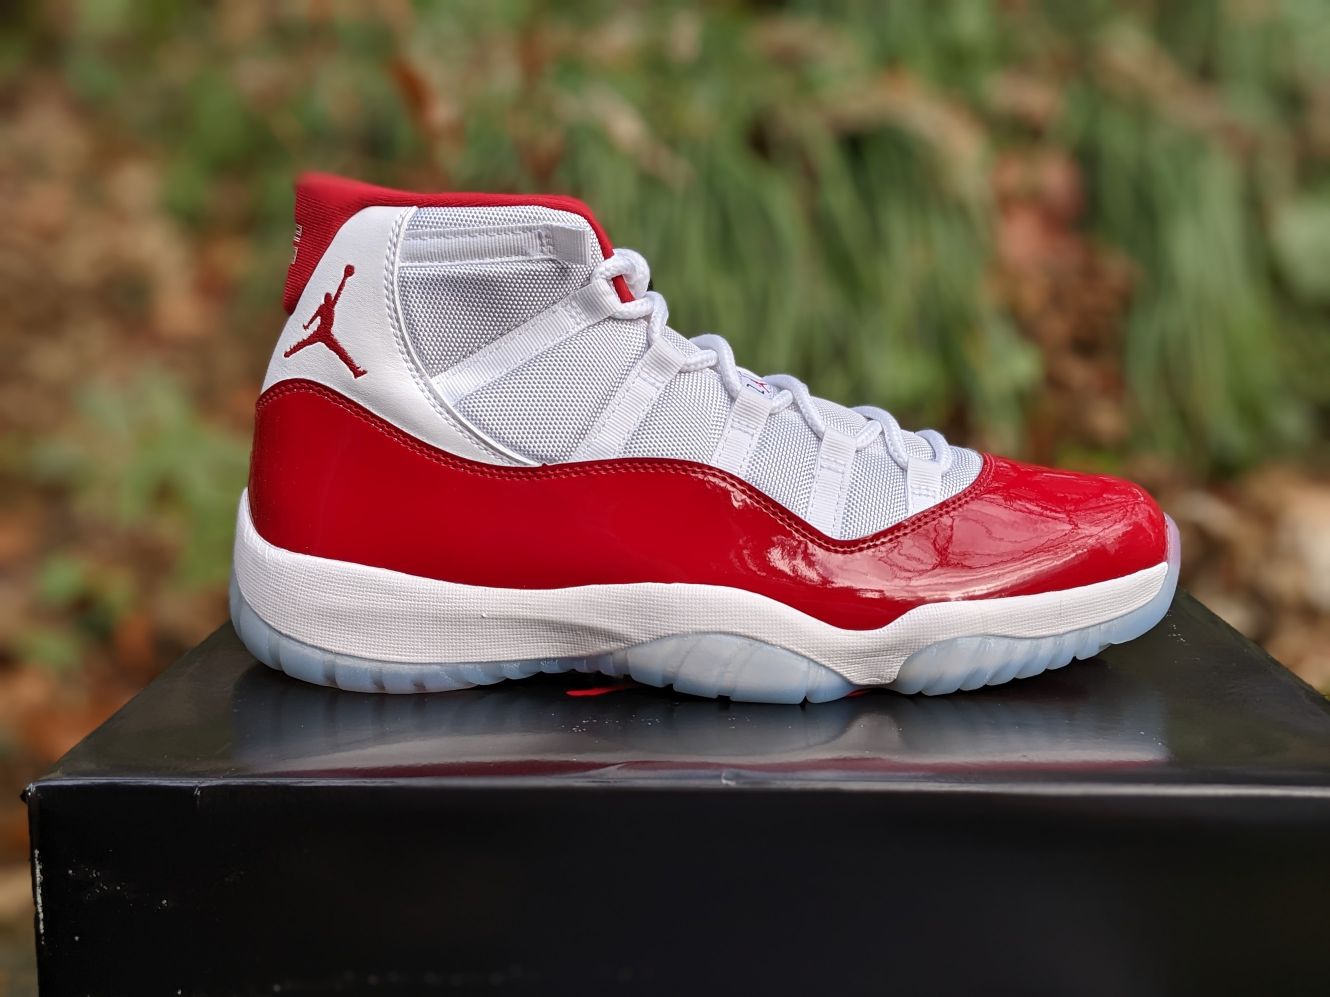 Jordan 11 Cherry: Still Sweet?